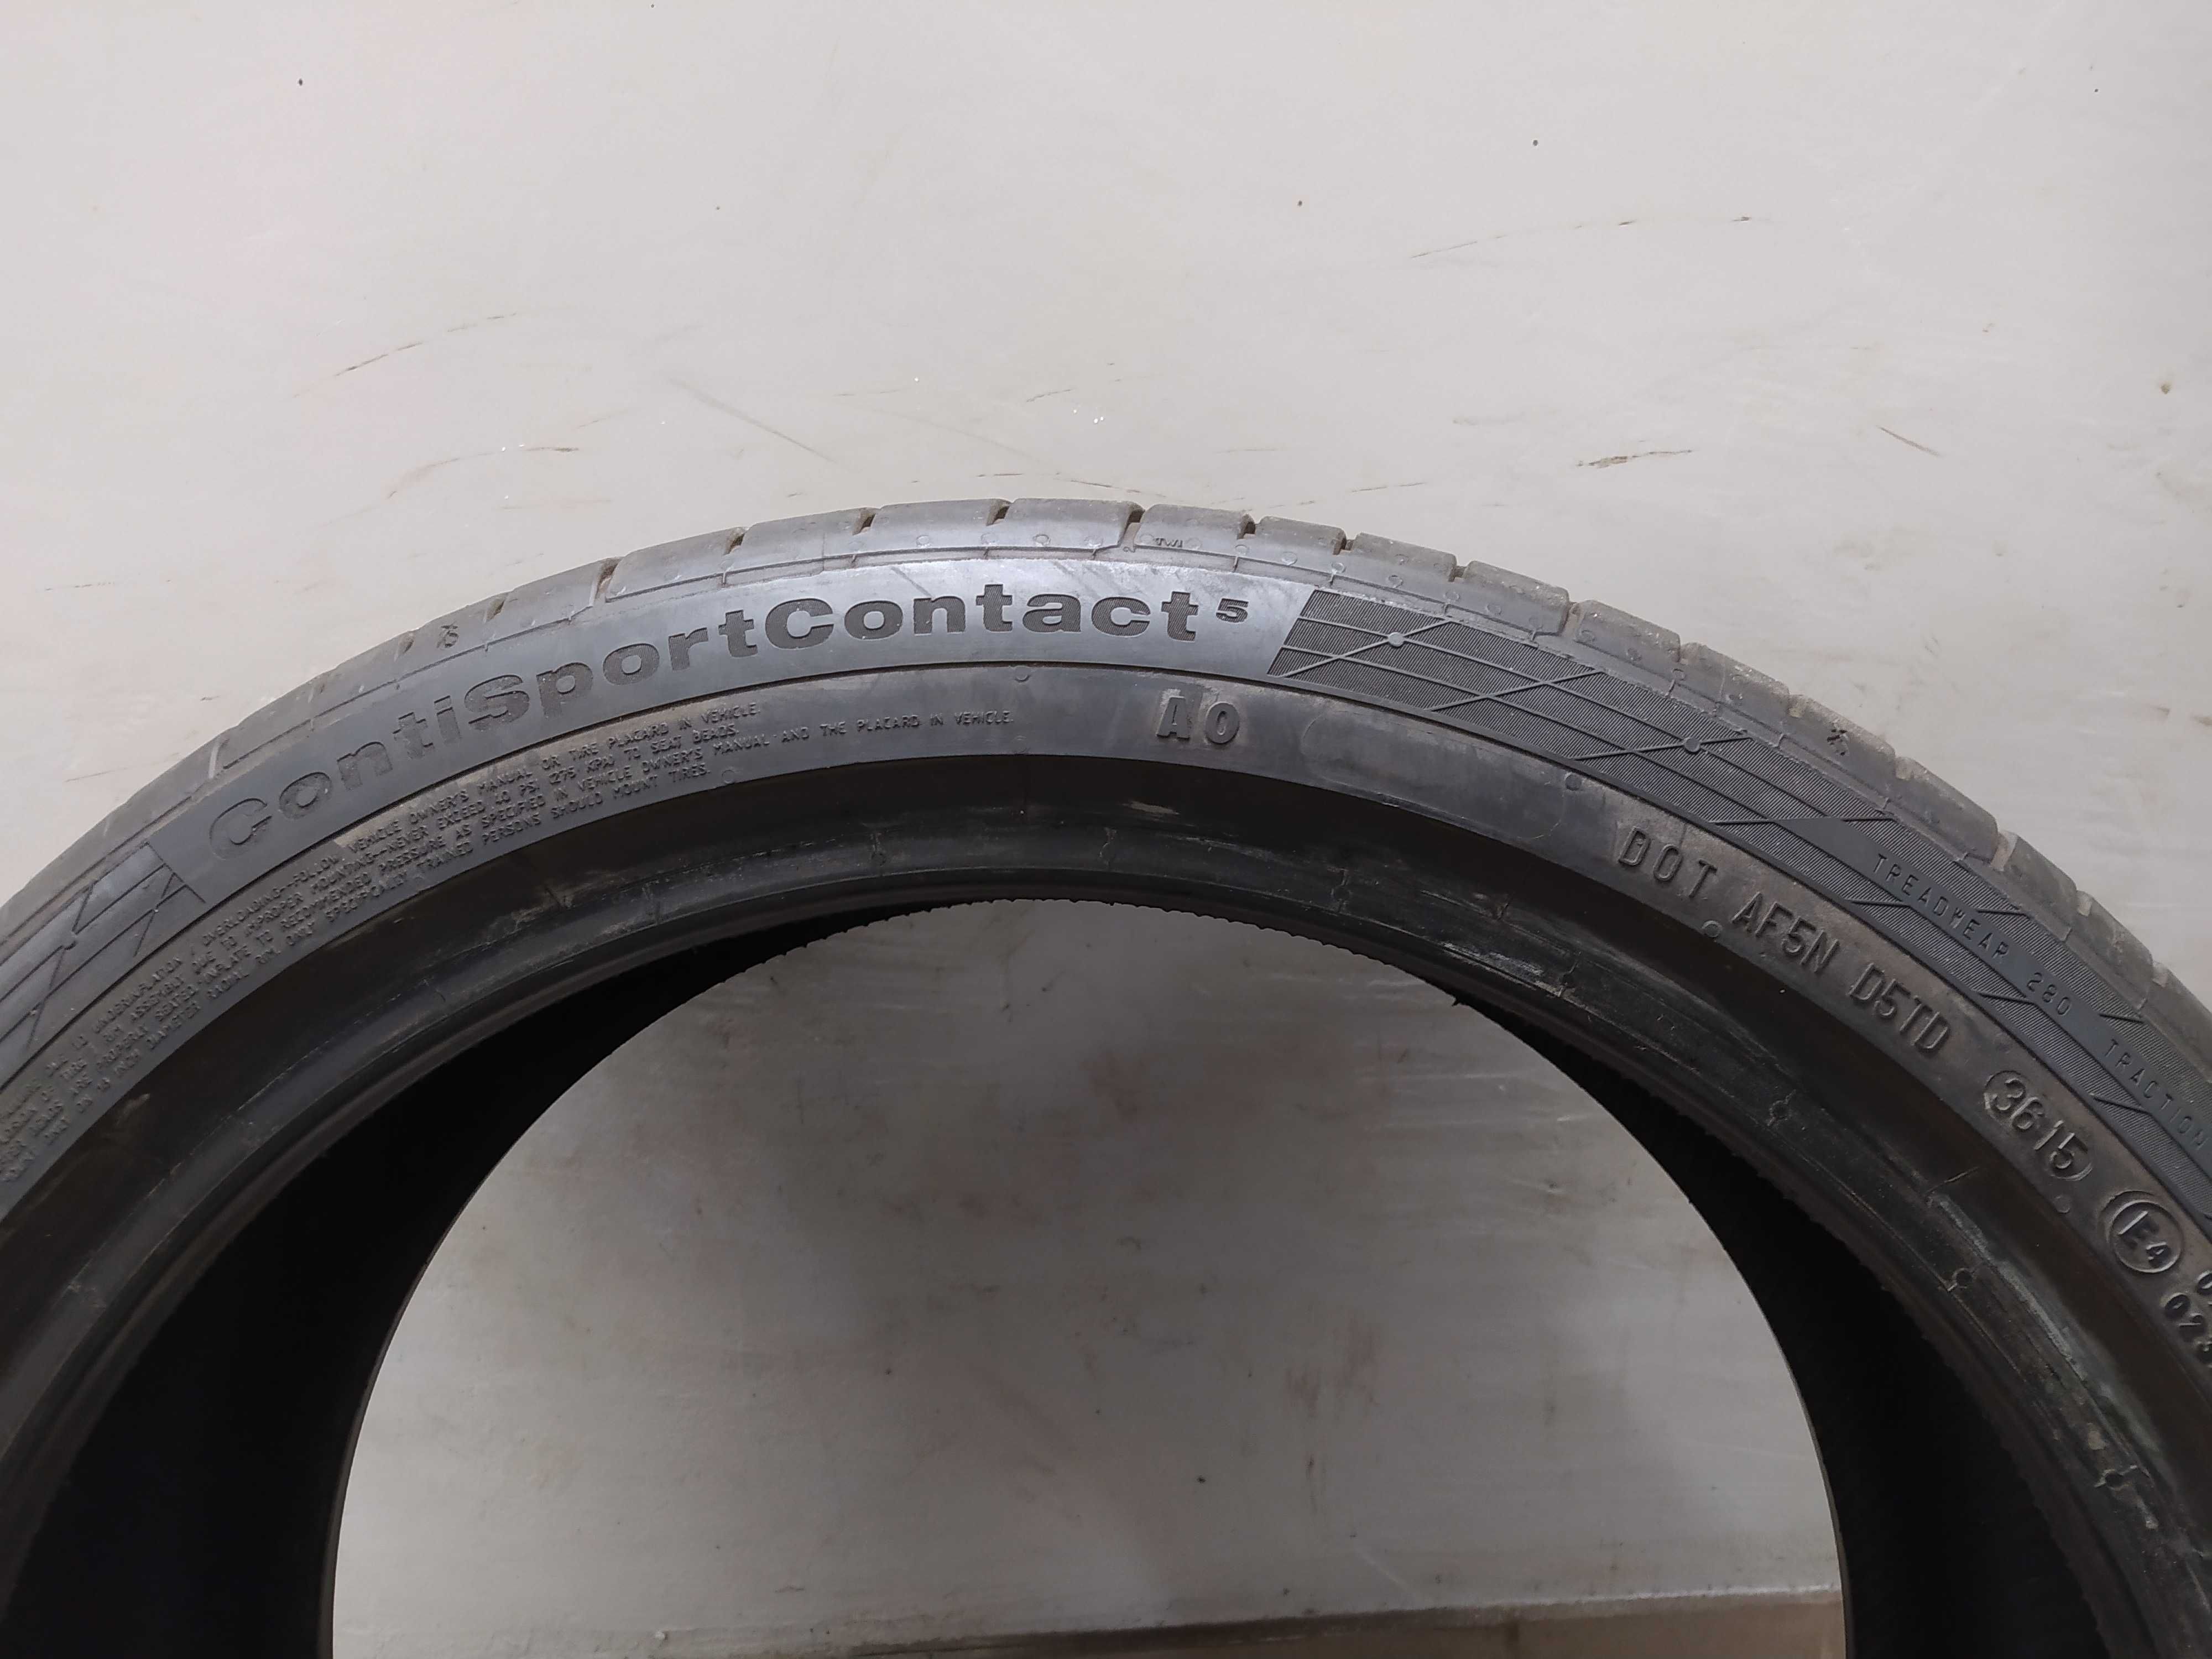 1x225/40R18 Continental ContiSportContact 5, 2015 rok, bieżnik 6,6mm